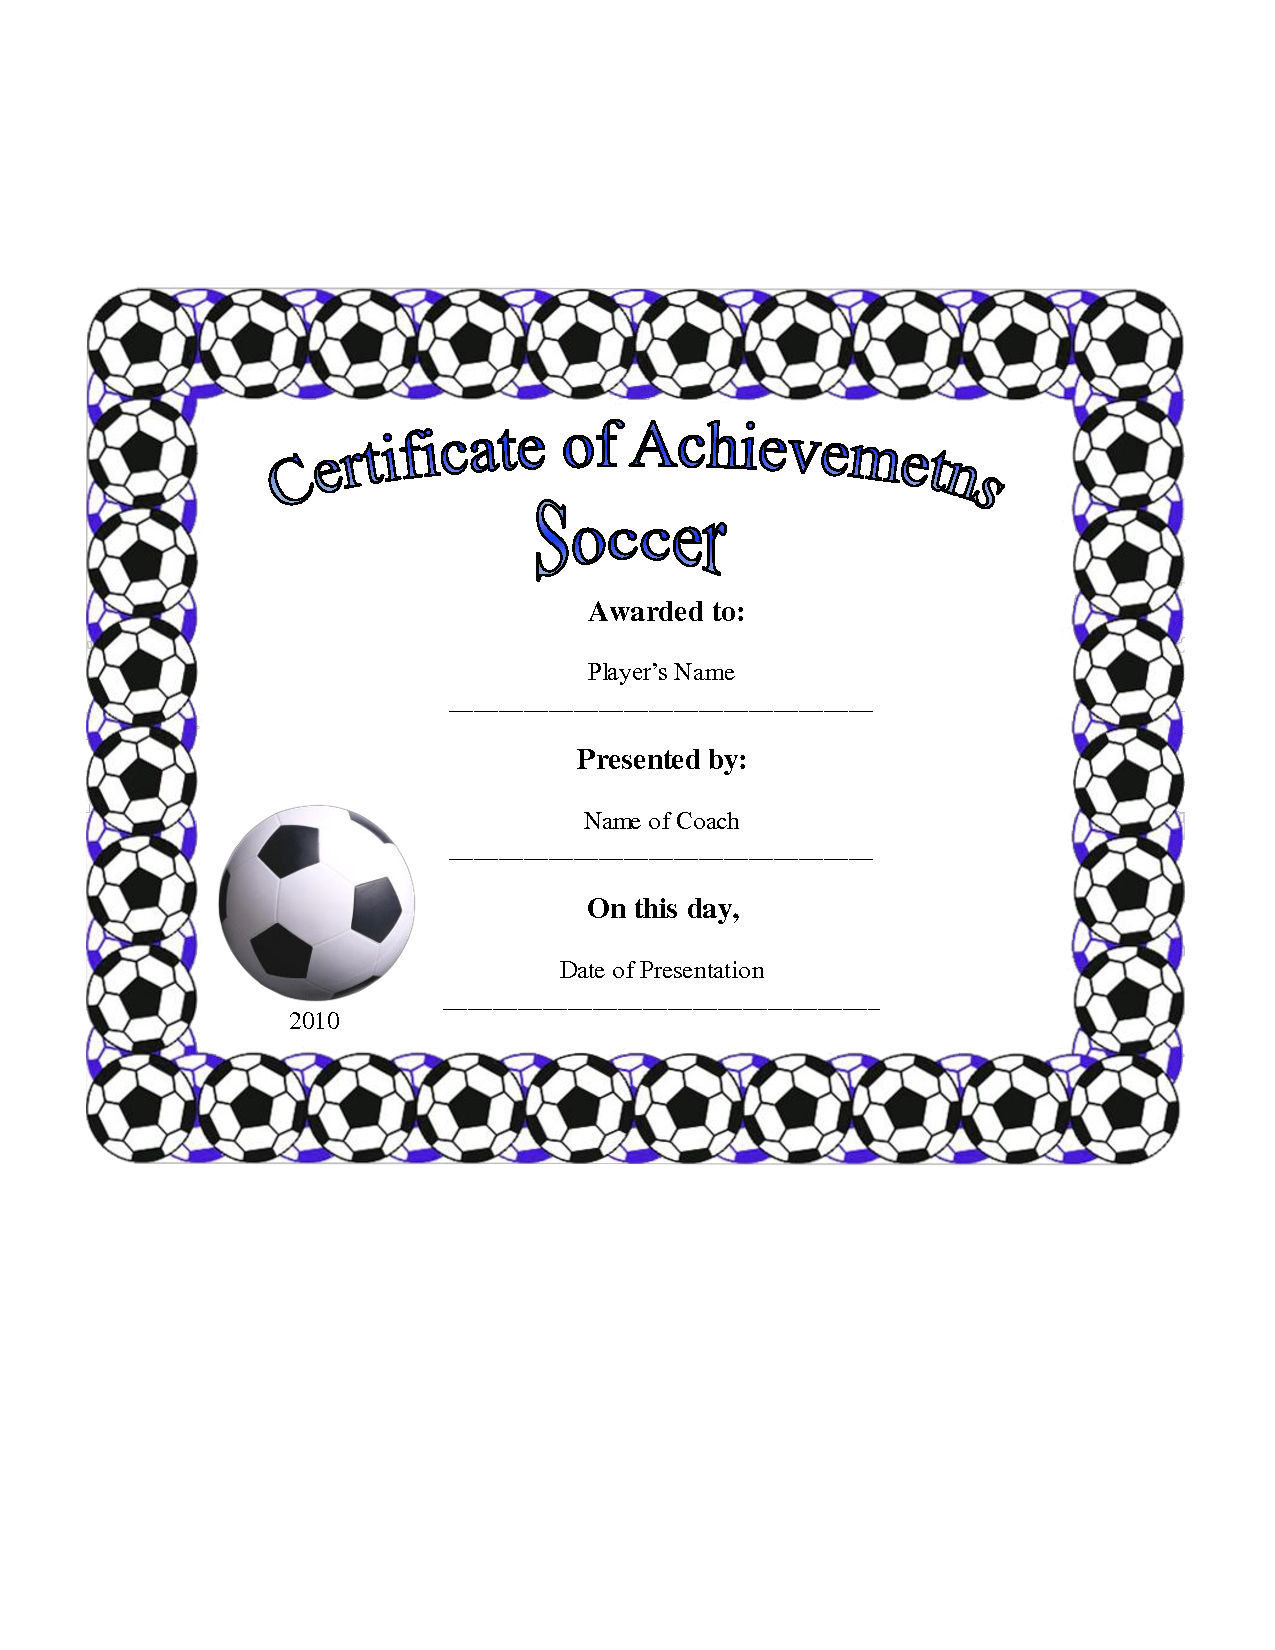 Free Soccer Certificate Templates ] – Soccer Certificate Throughout Soccer Certificate Template Free